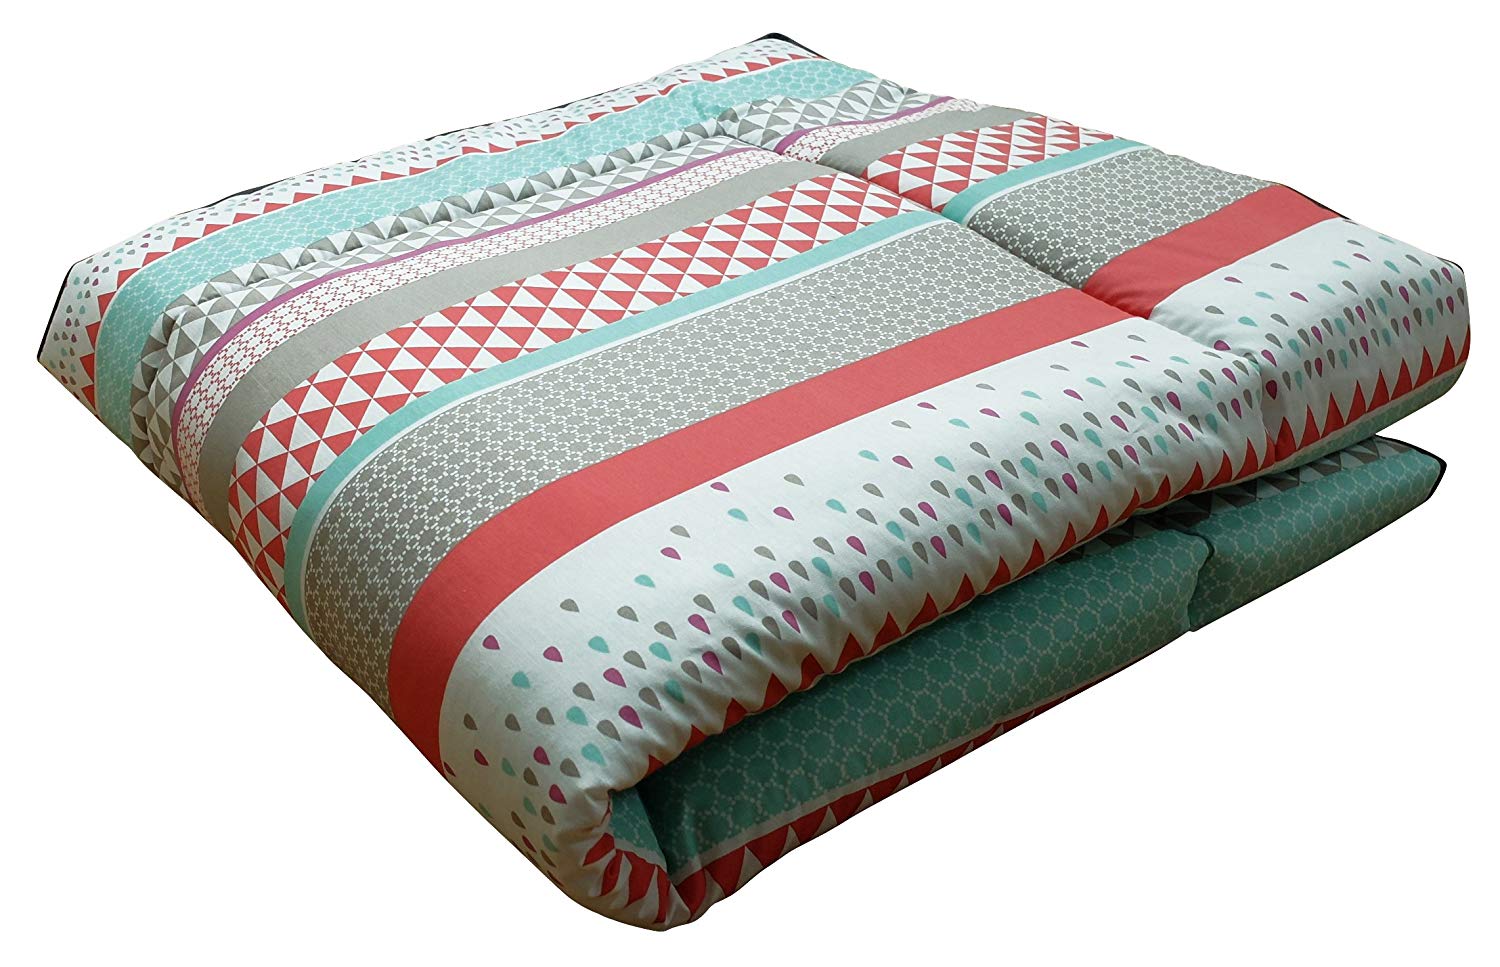 Ideenreich 2392 Crawling Blanket King Playpen Mattress, 120 x 120 cm Multi-Coloured